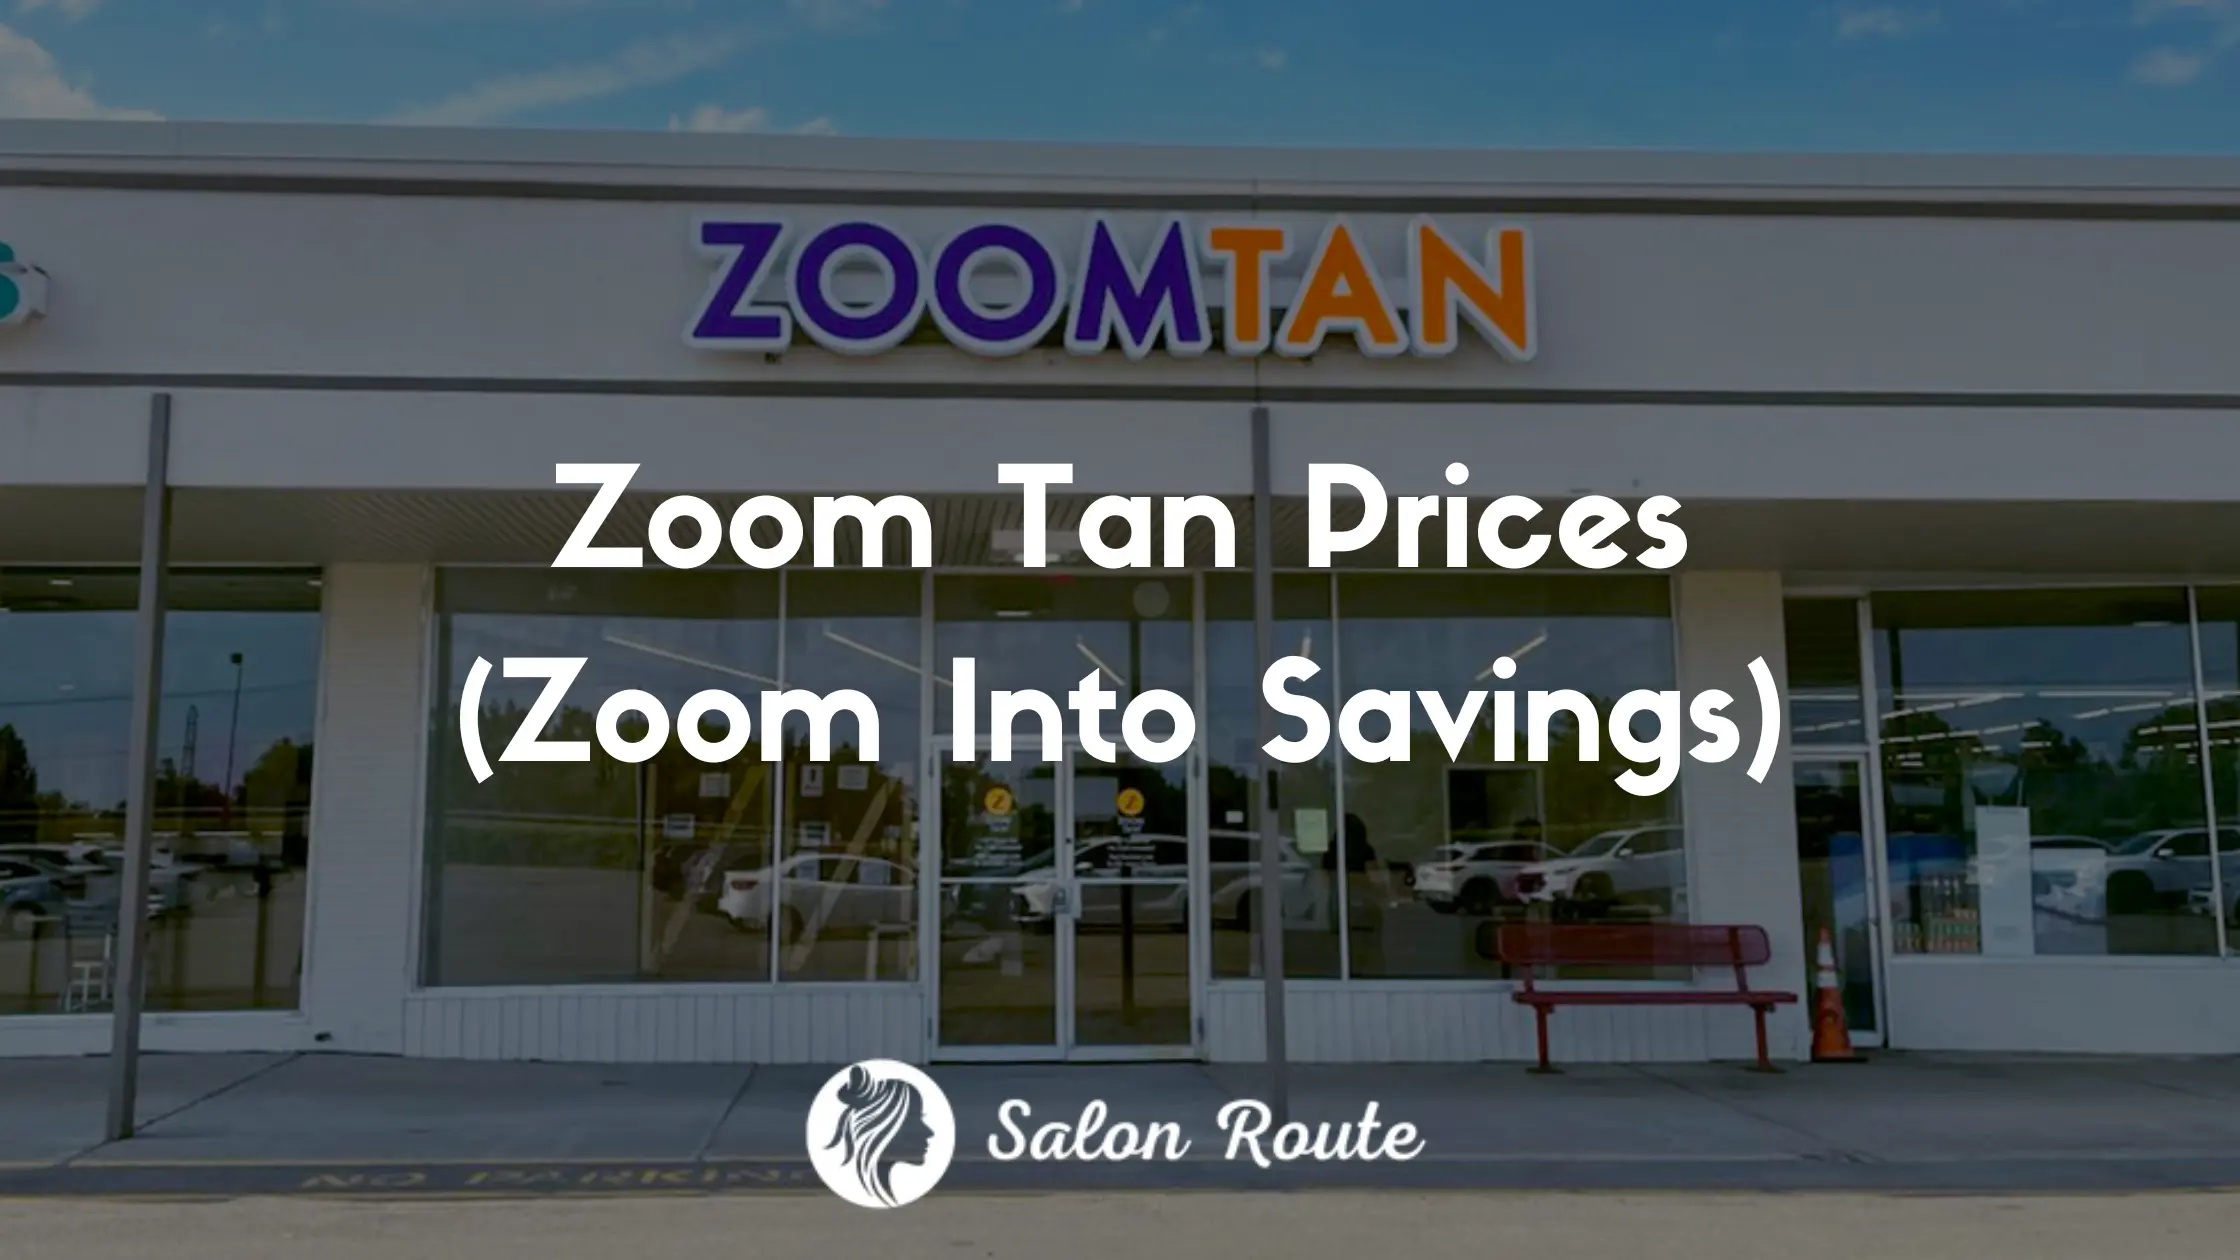 Zoom Tan Prices (Zoom Into Savings)